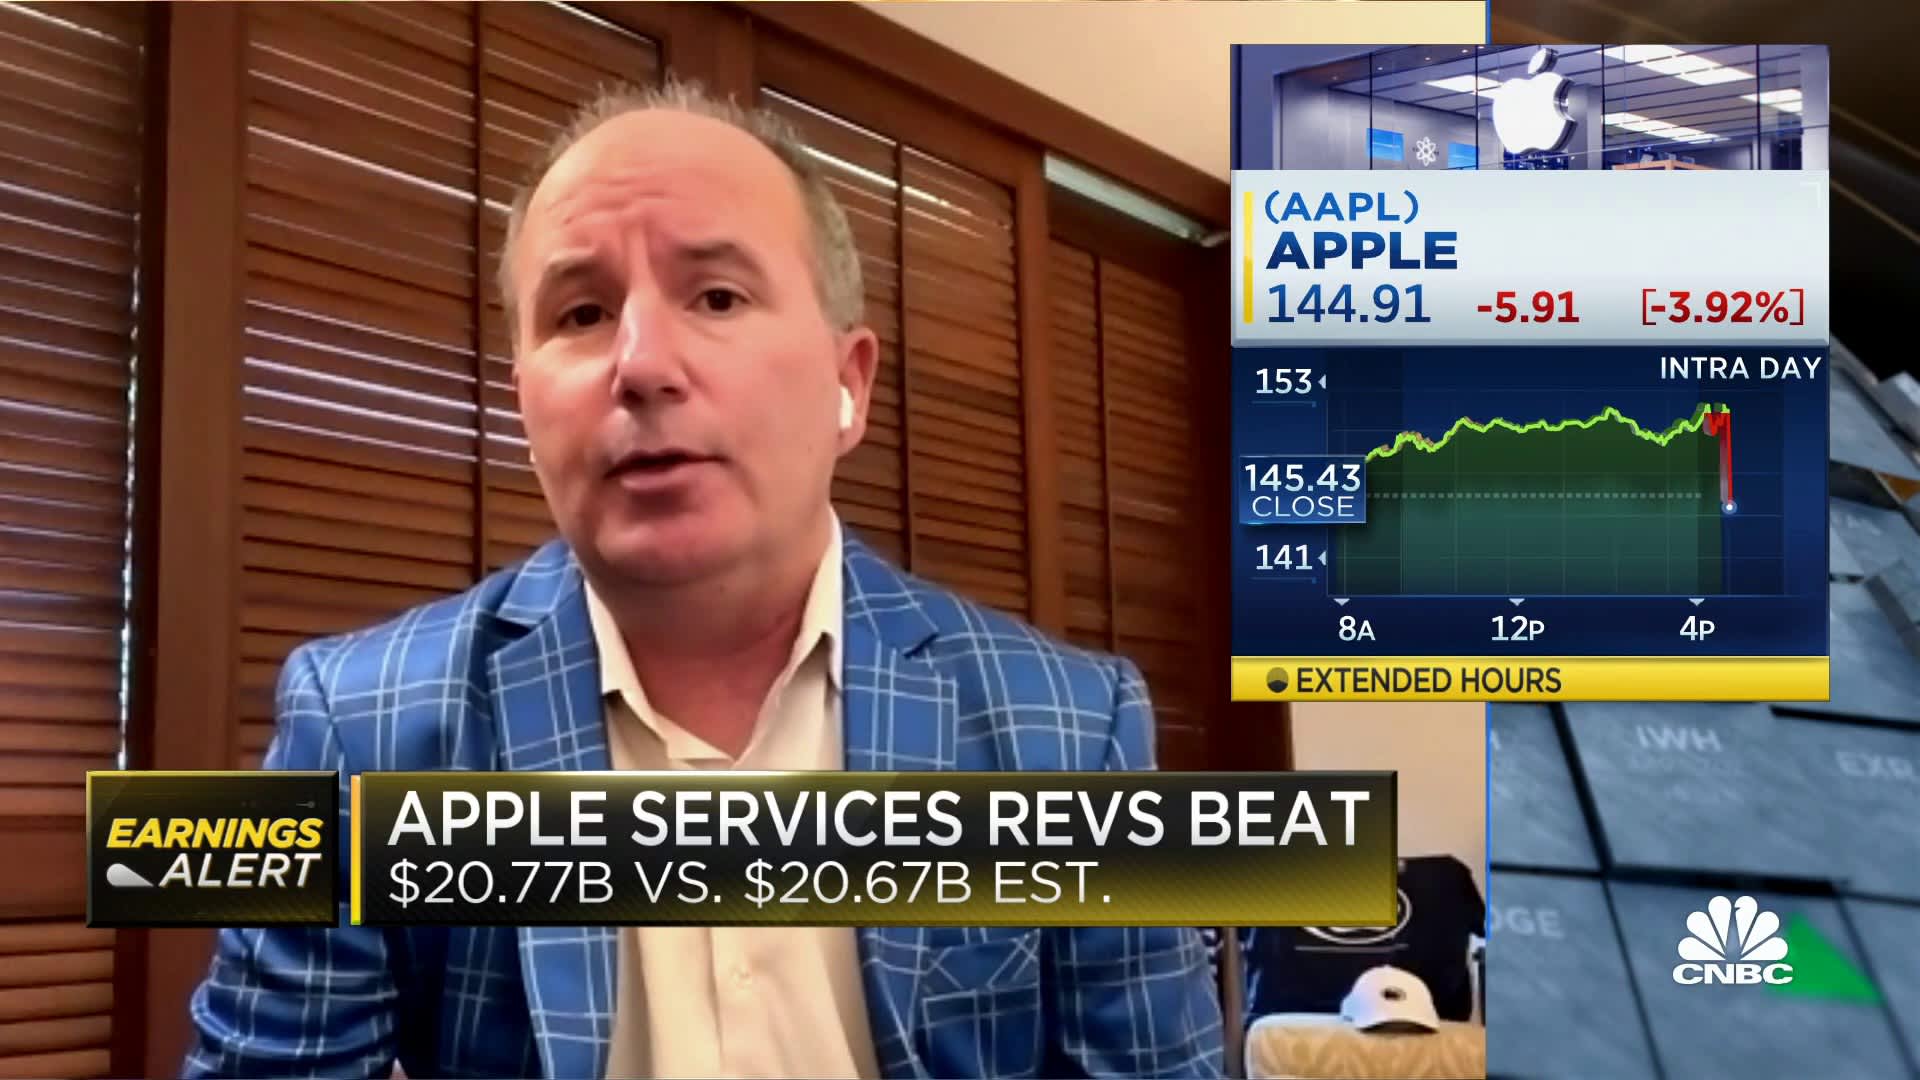 Wedbush's Dan Ives on Apple earnings: Much better than feared